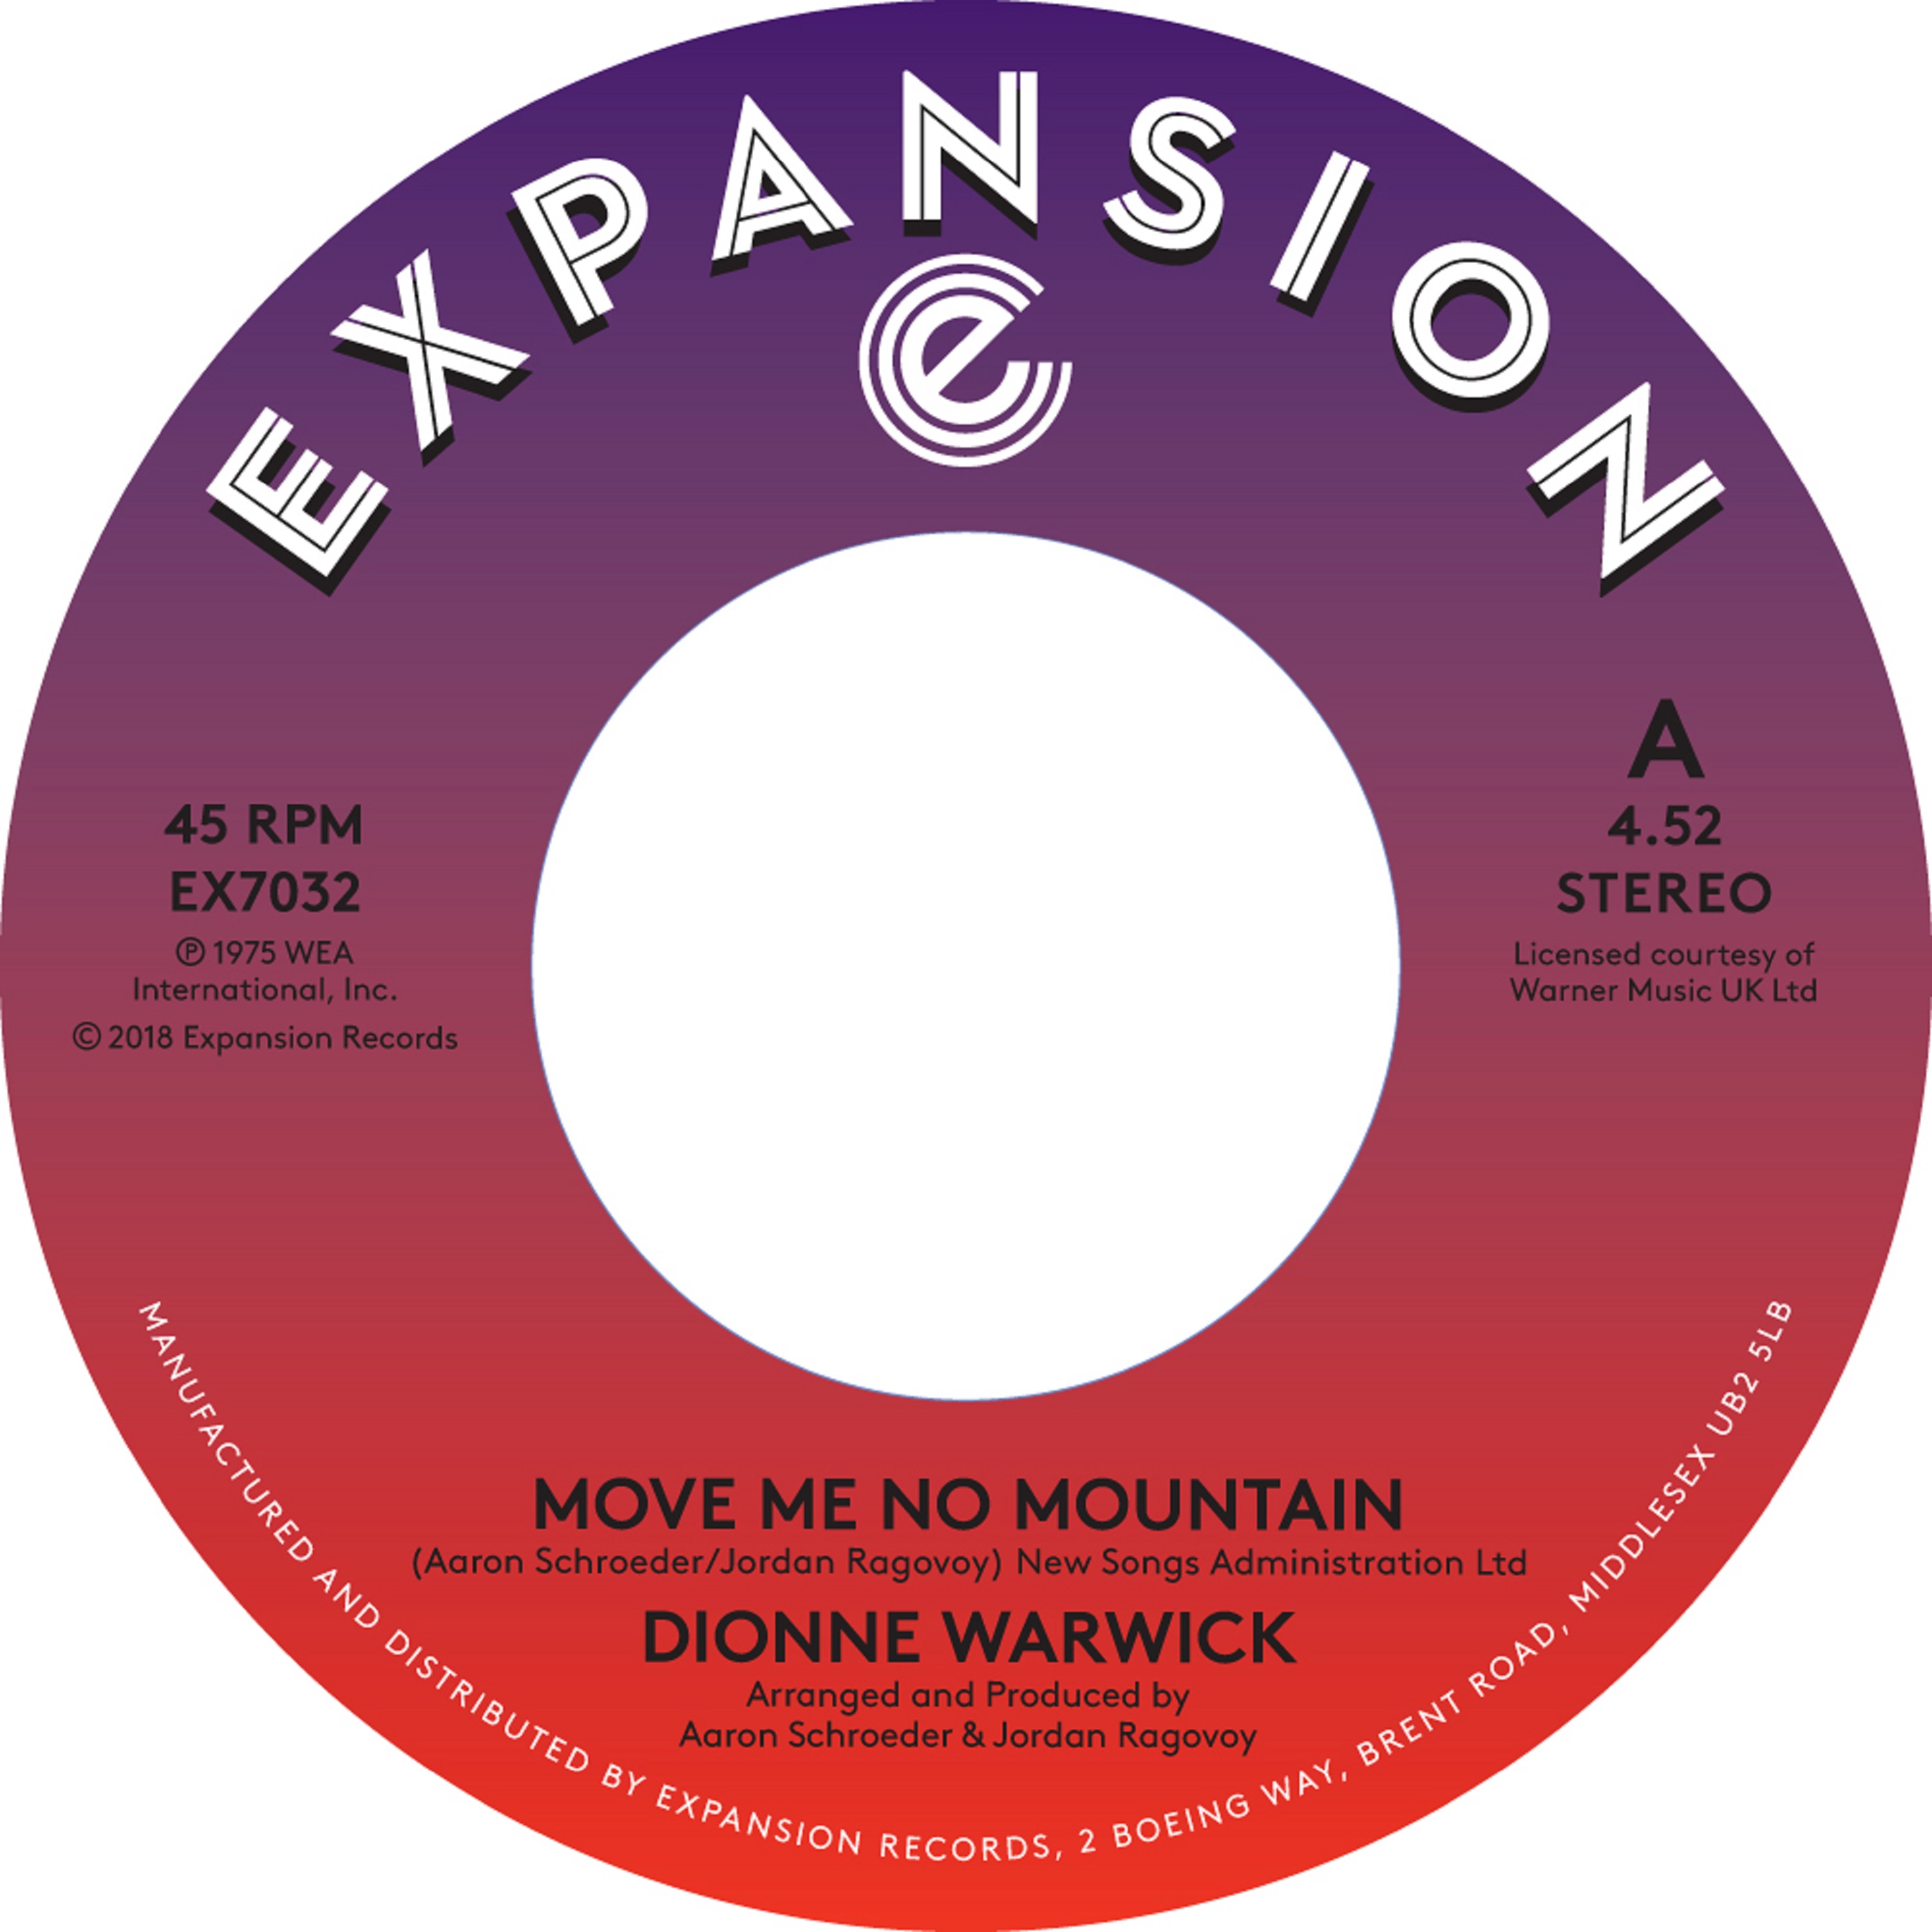 Dionne Warwick/MOVE ME NO MOUNTAIN 7"